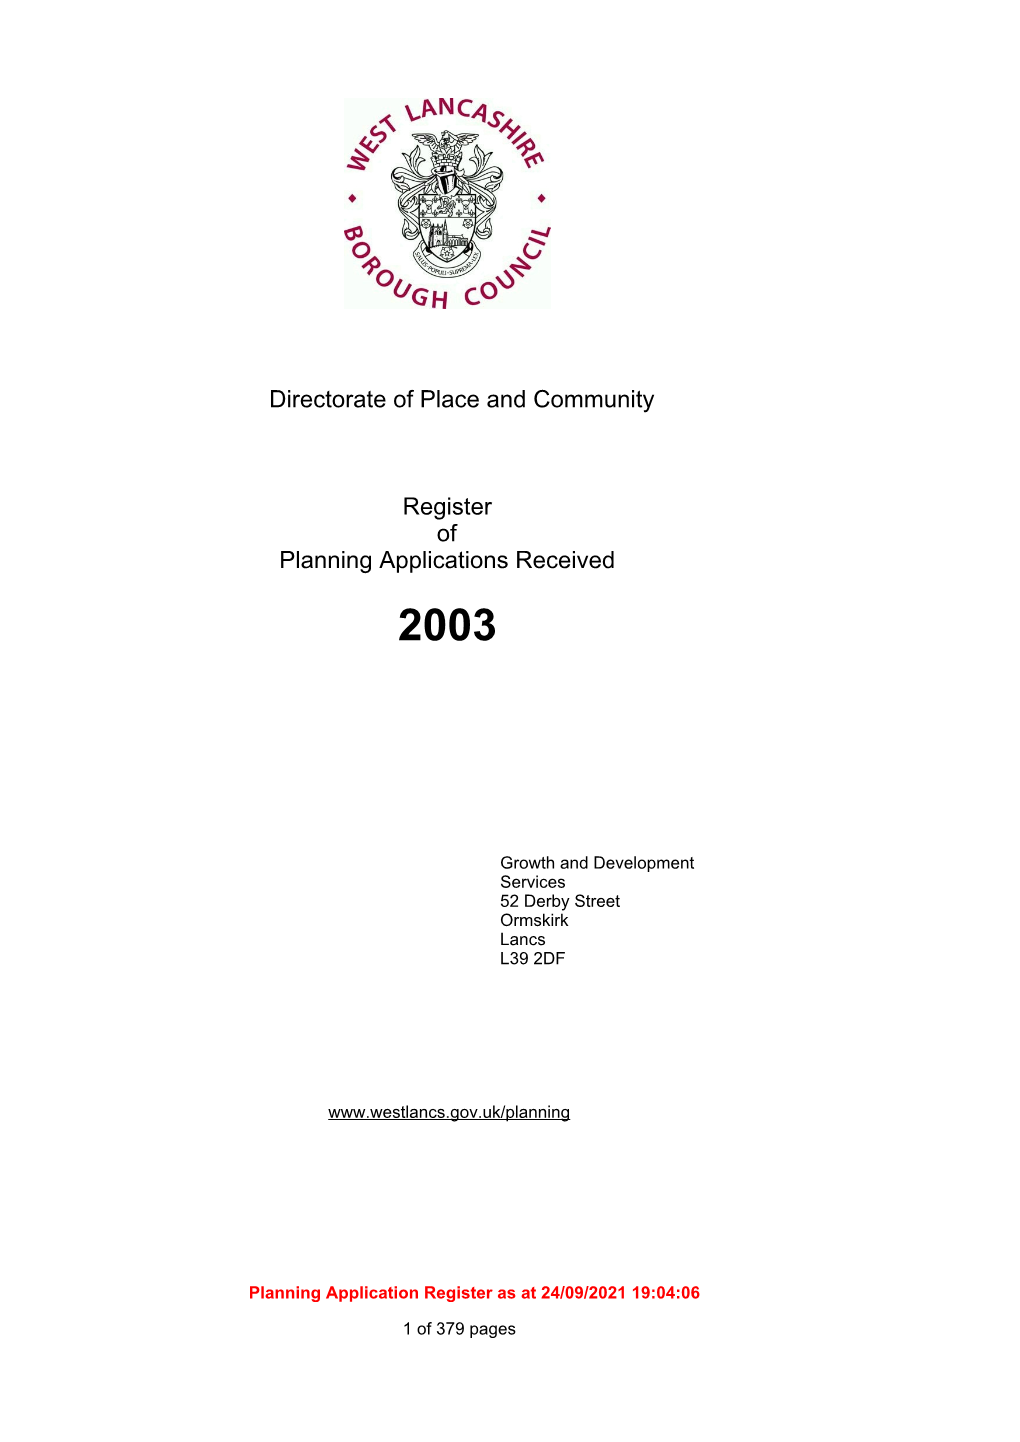 Register of Planning Applications 2003